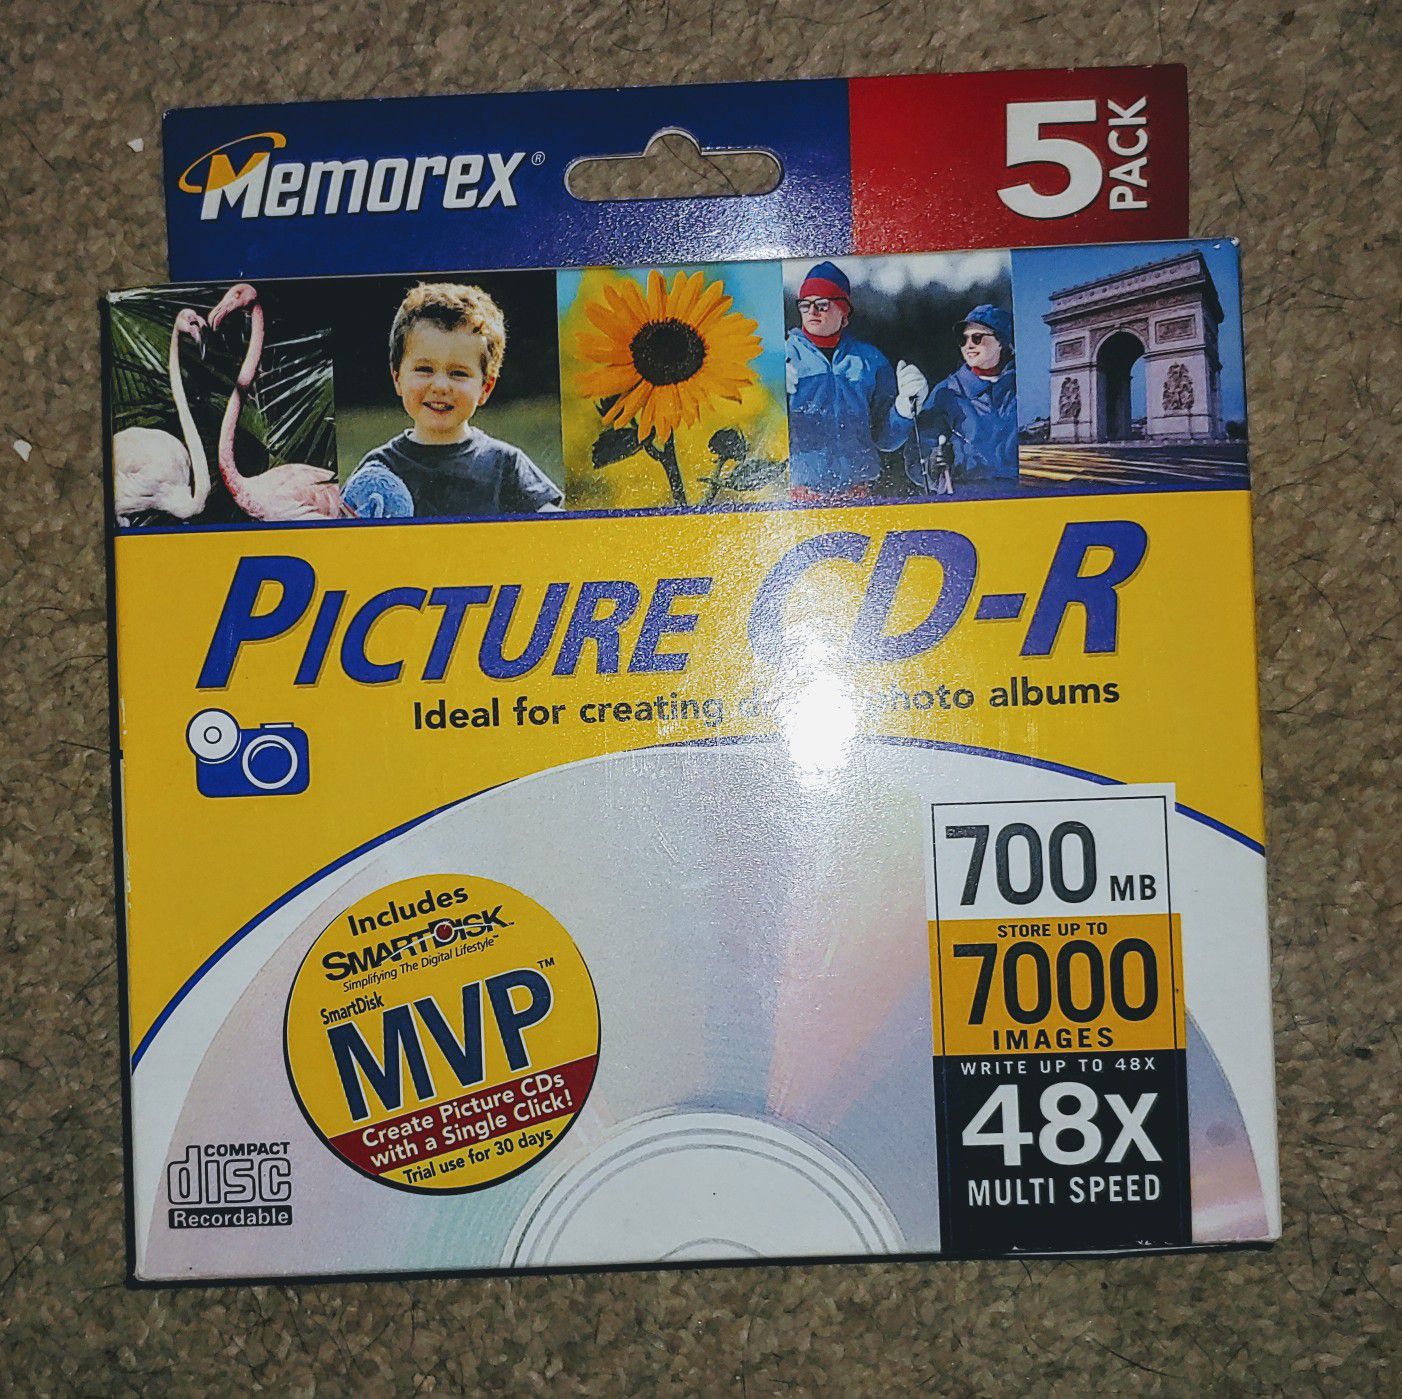 Memorex (5pk) Picture Cd-R digital photo albums